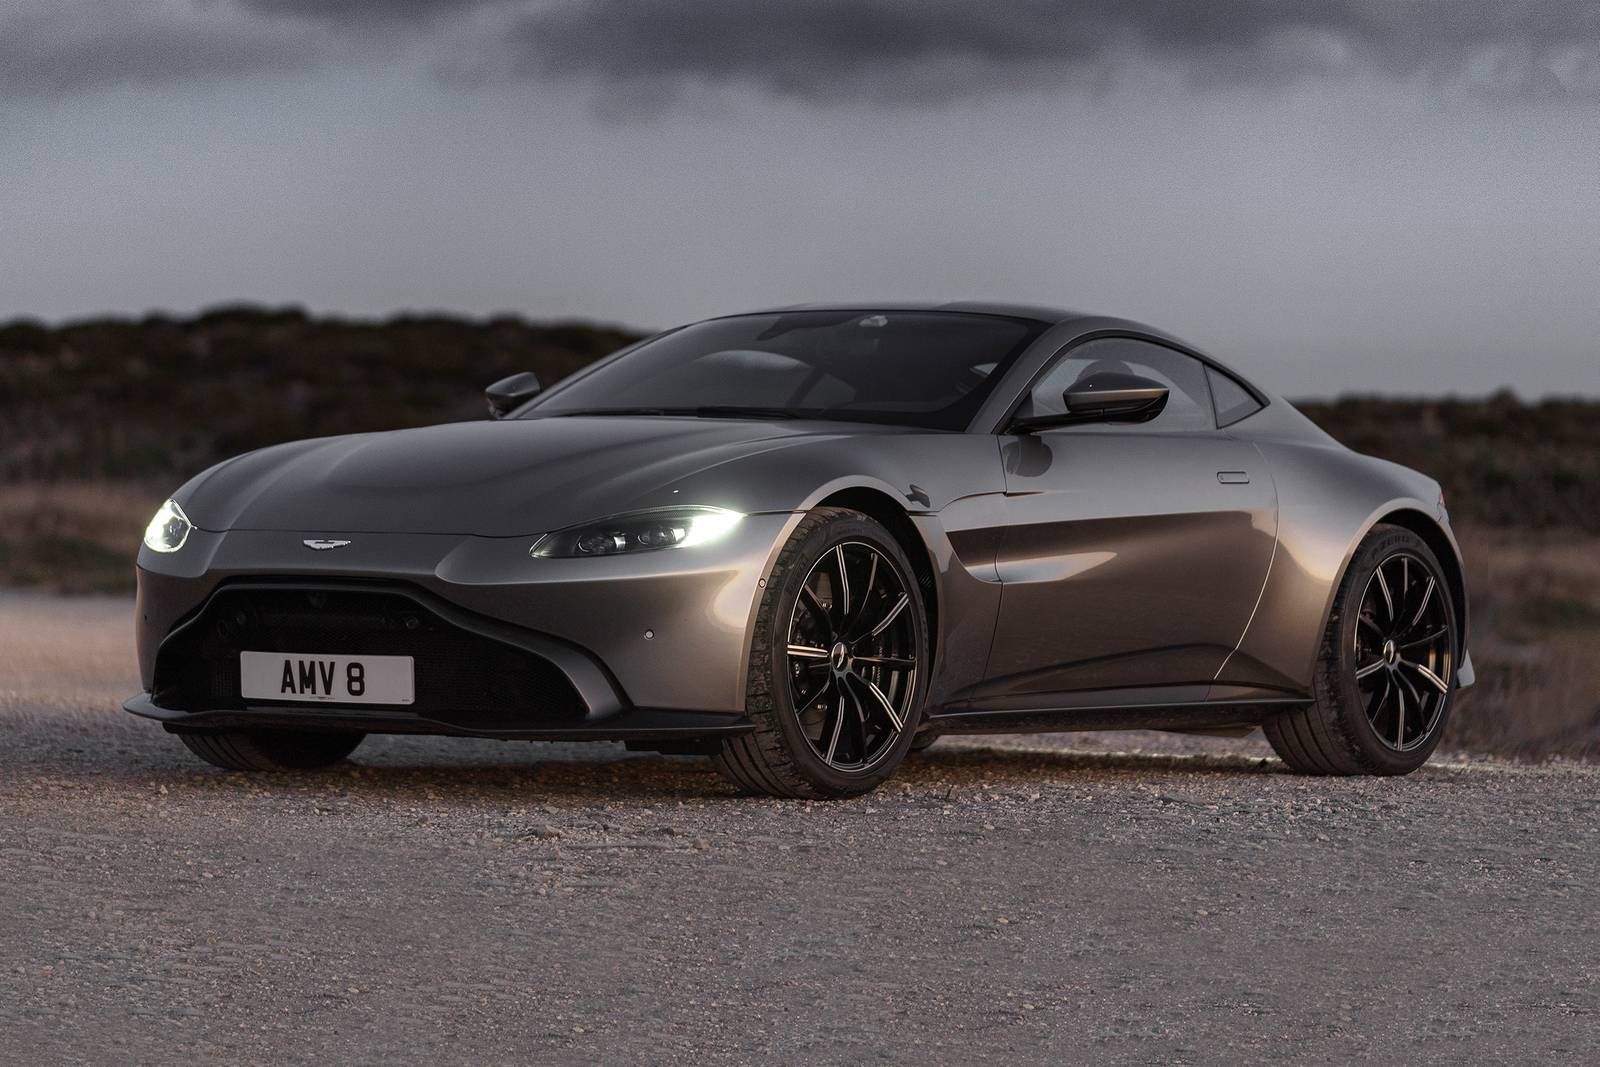 An Aston Martin Vantage Parked On A Road